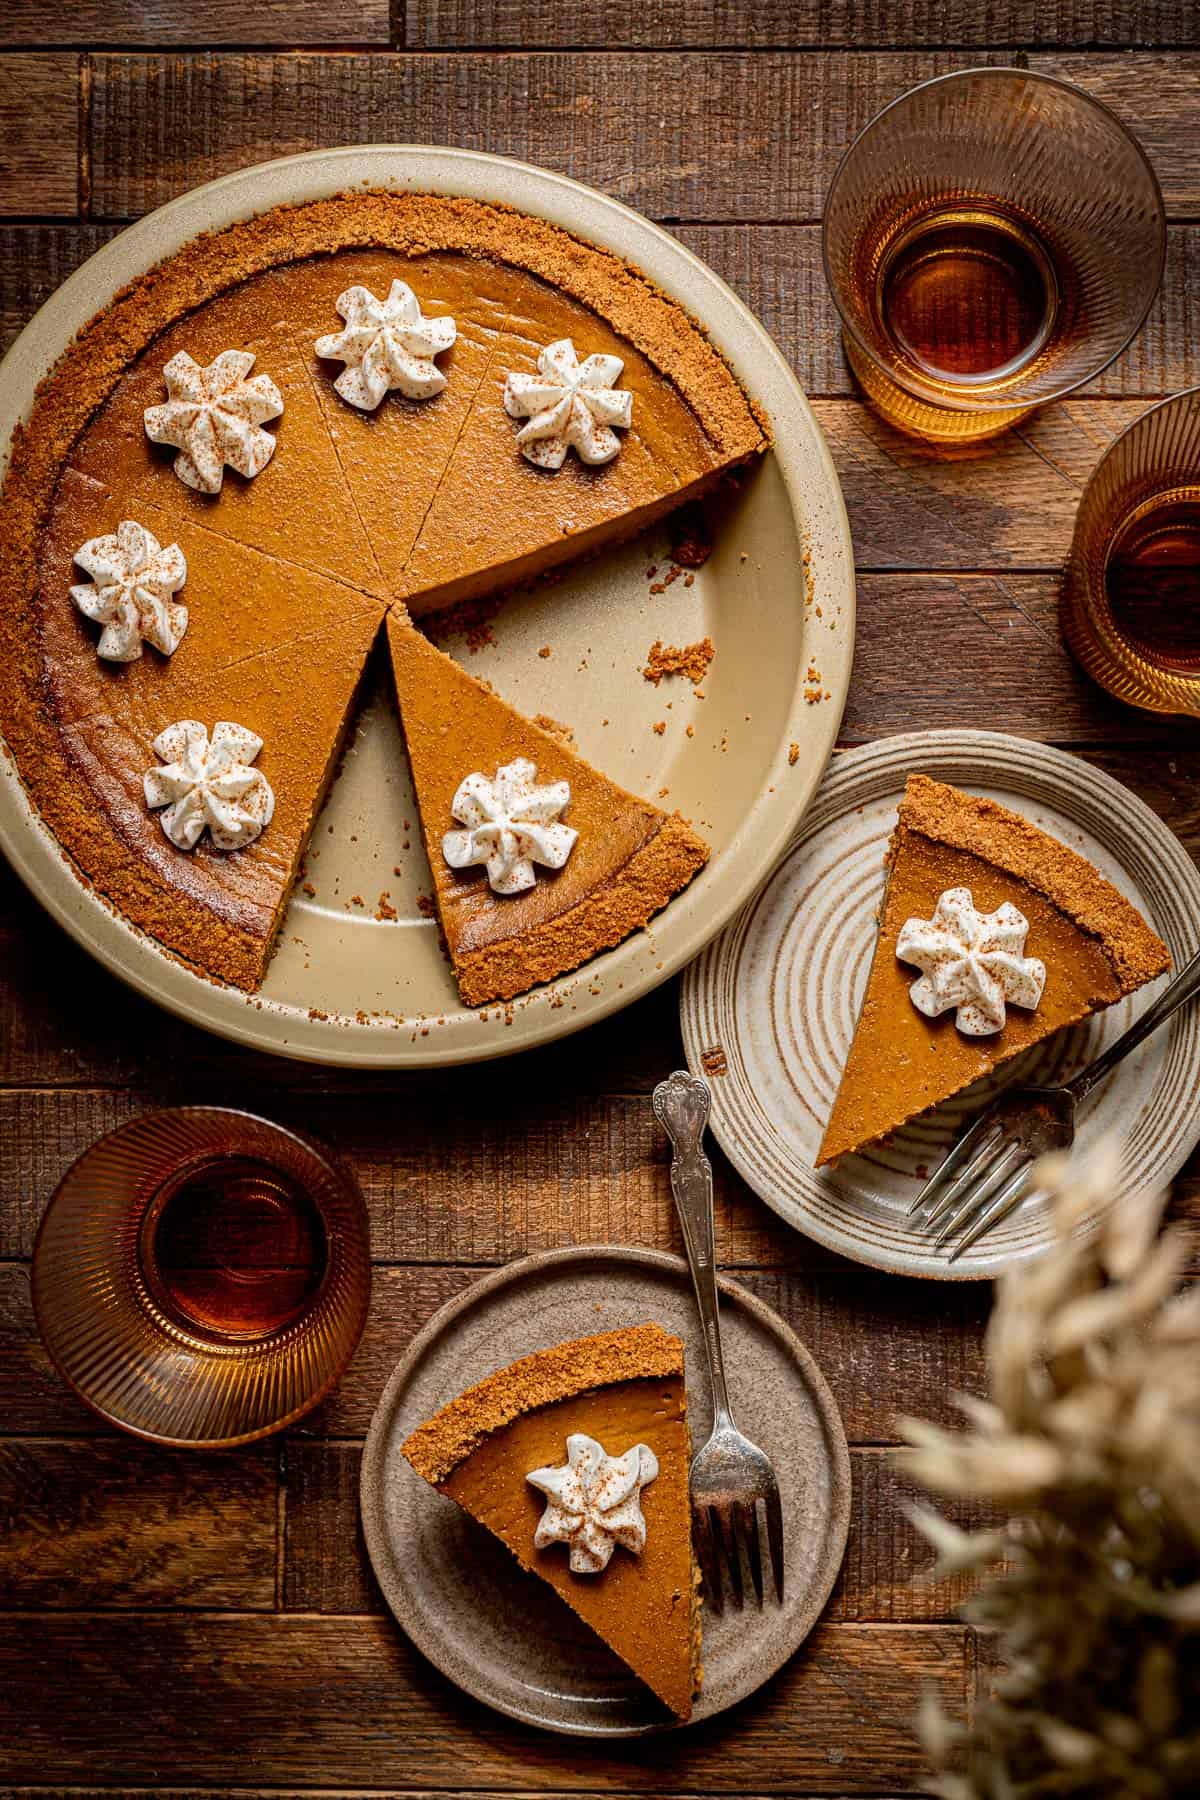 pumpkin pie with graham cracker crust in gold pie pan next to pieces of pie on plates.